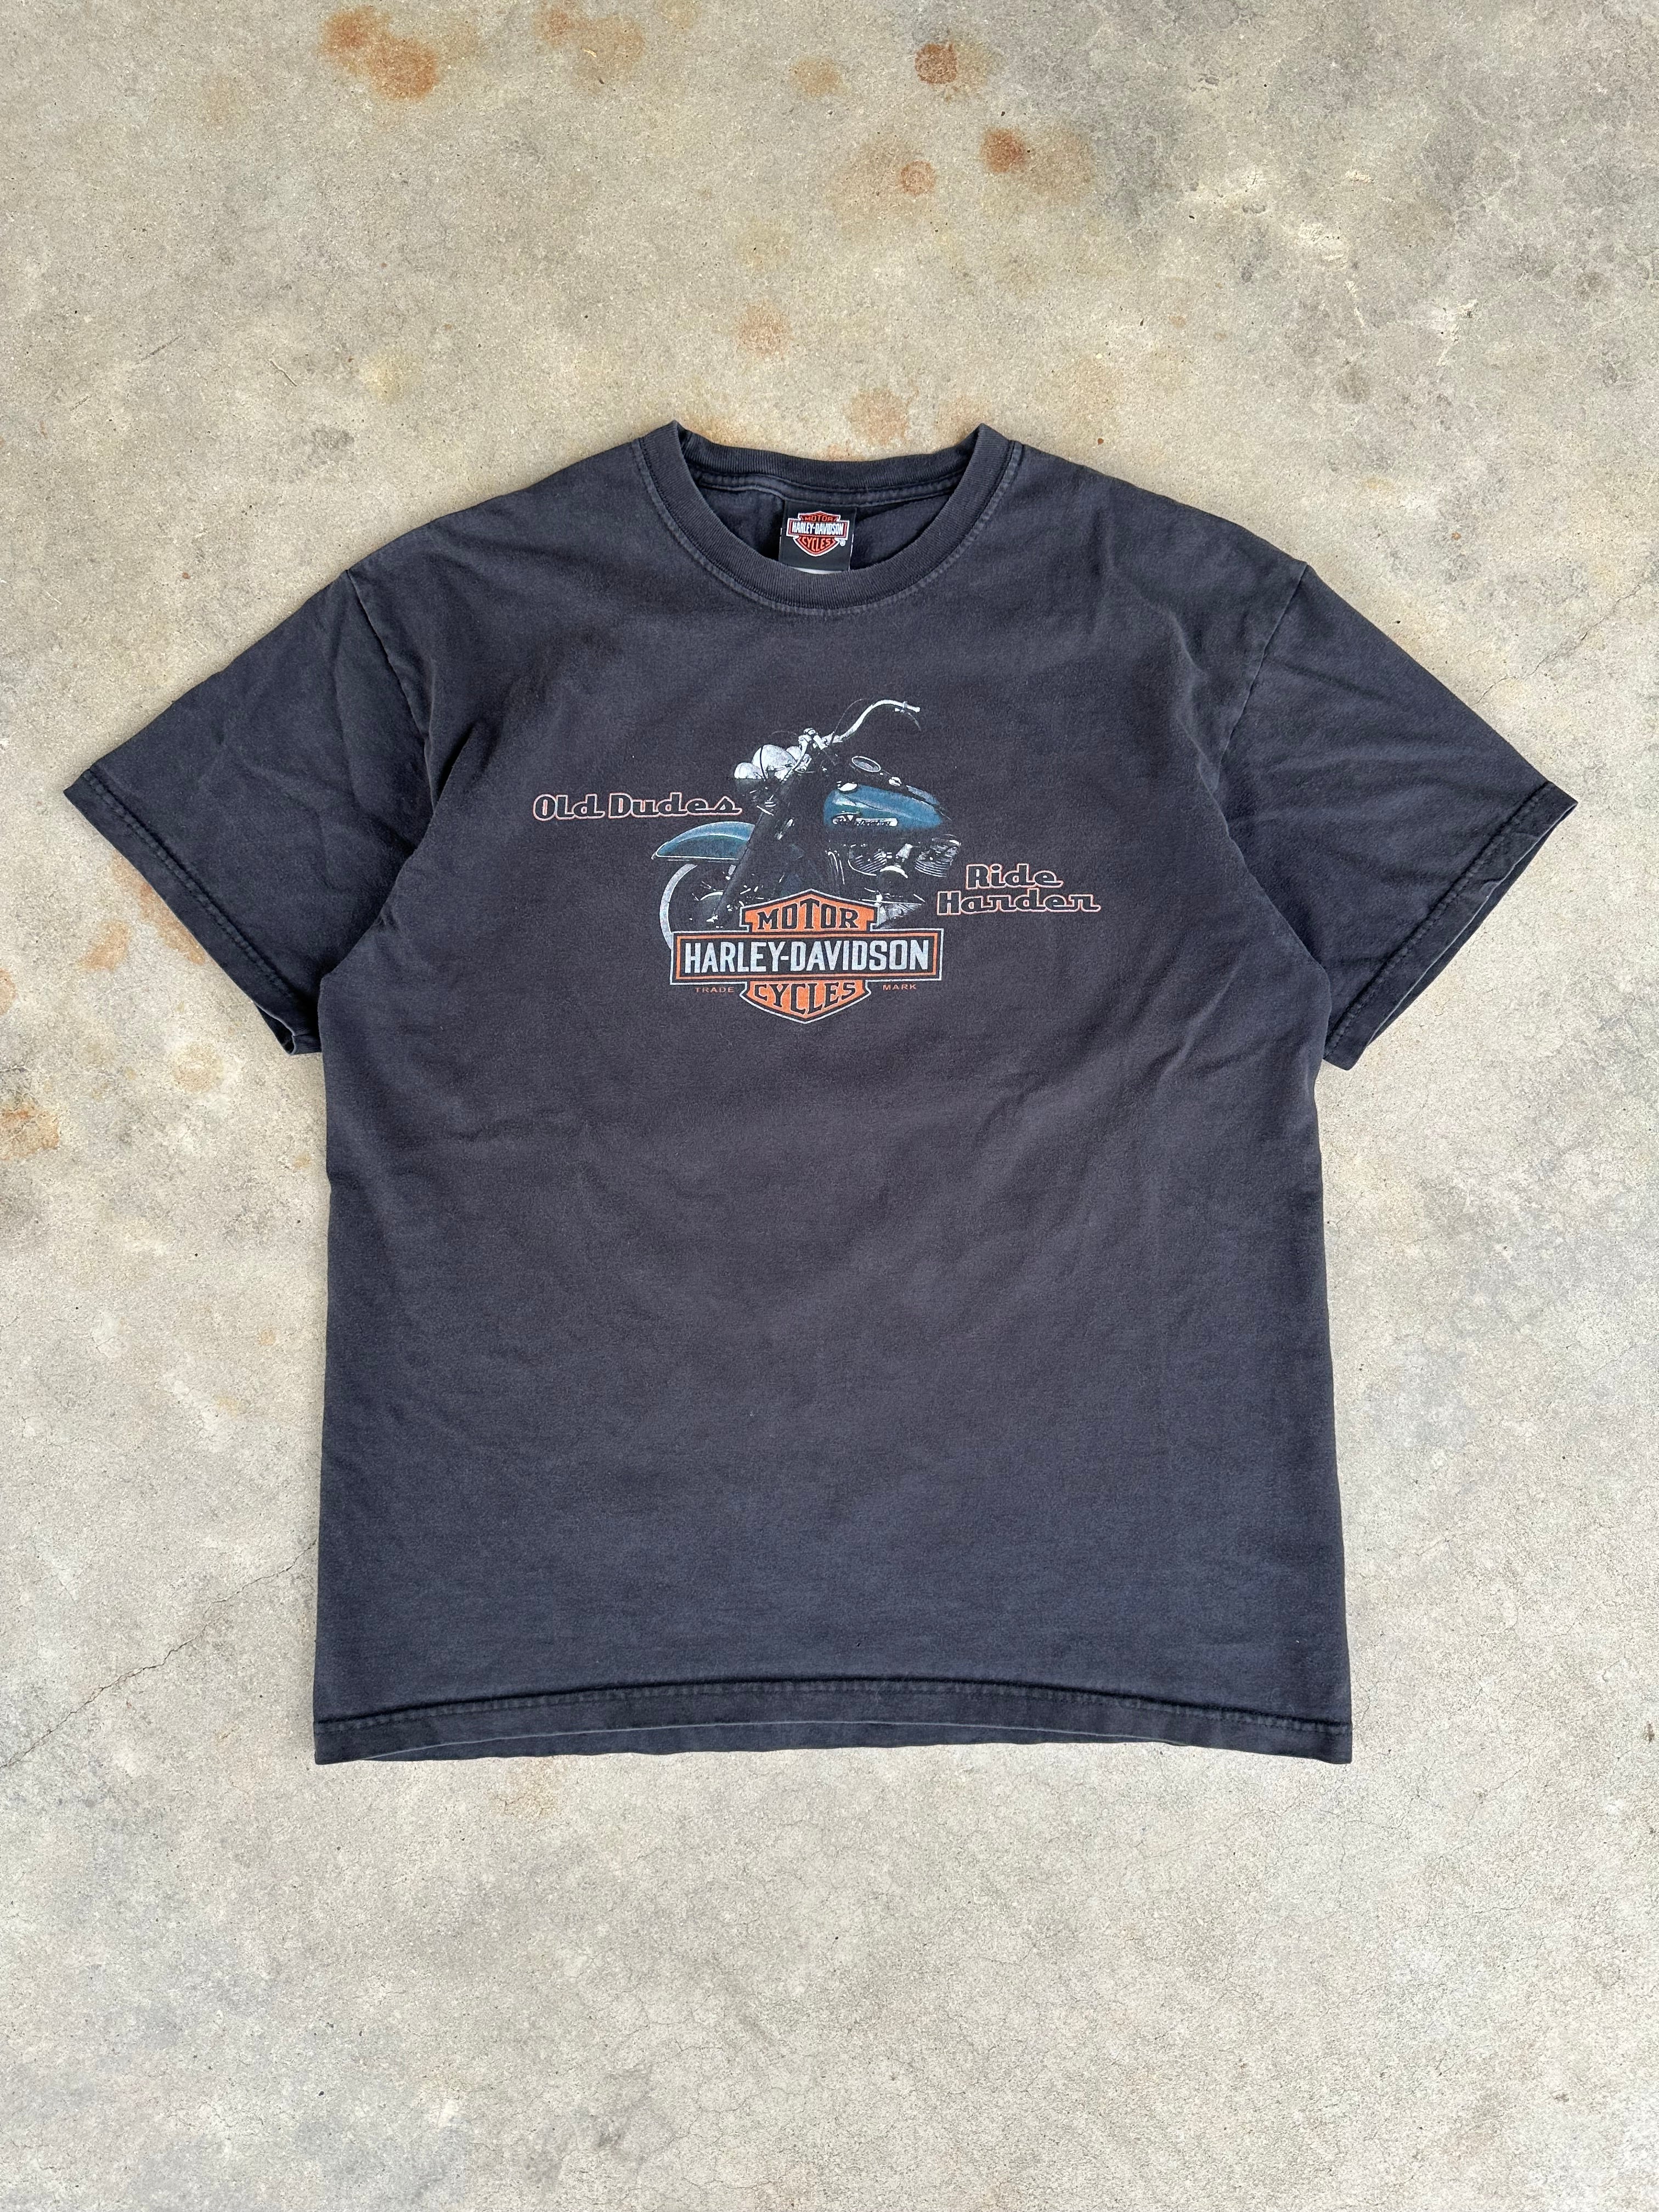 2000s Faded Harley Davidson T-Shirt